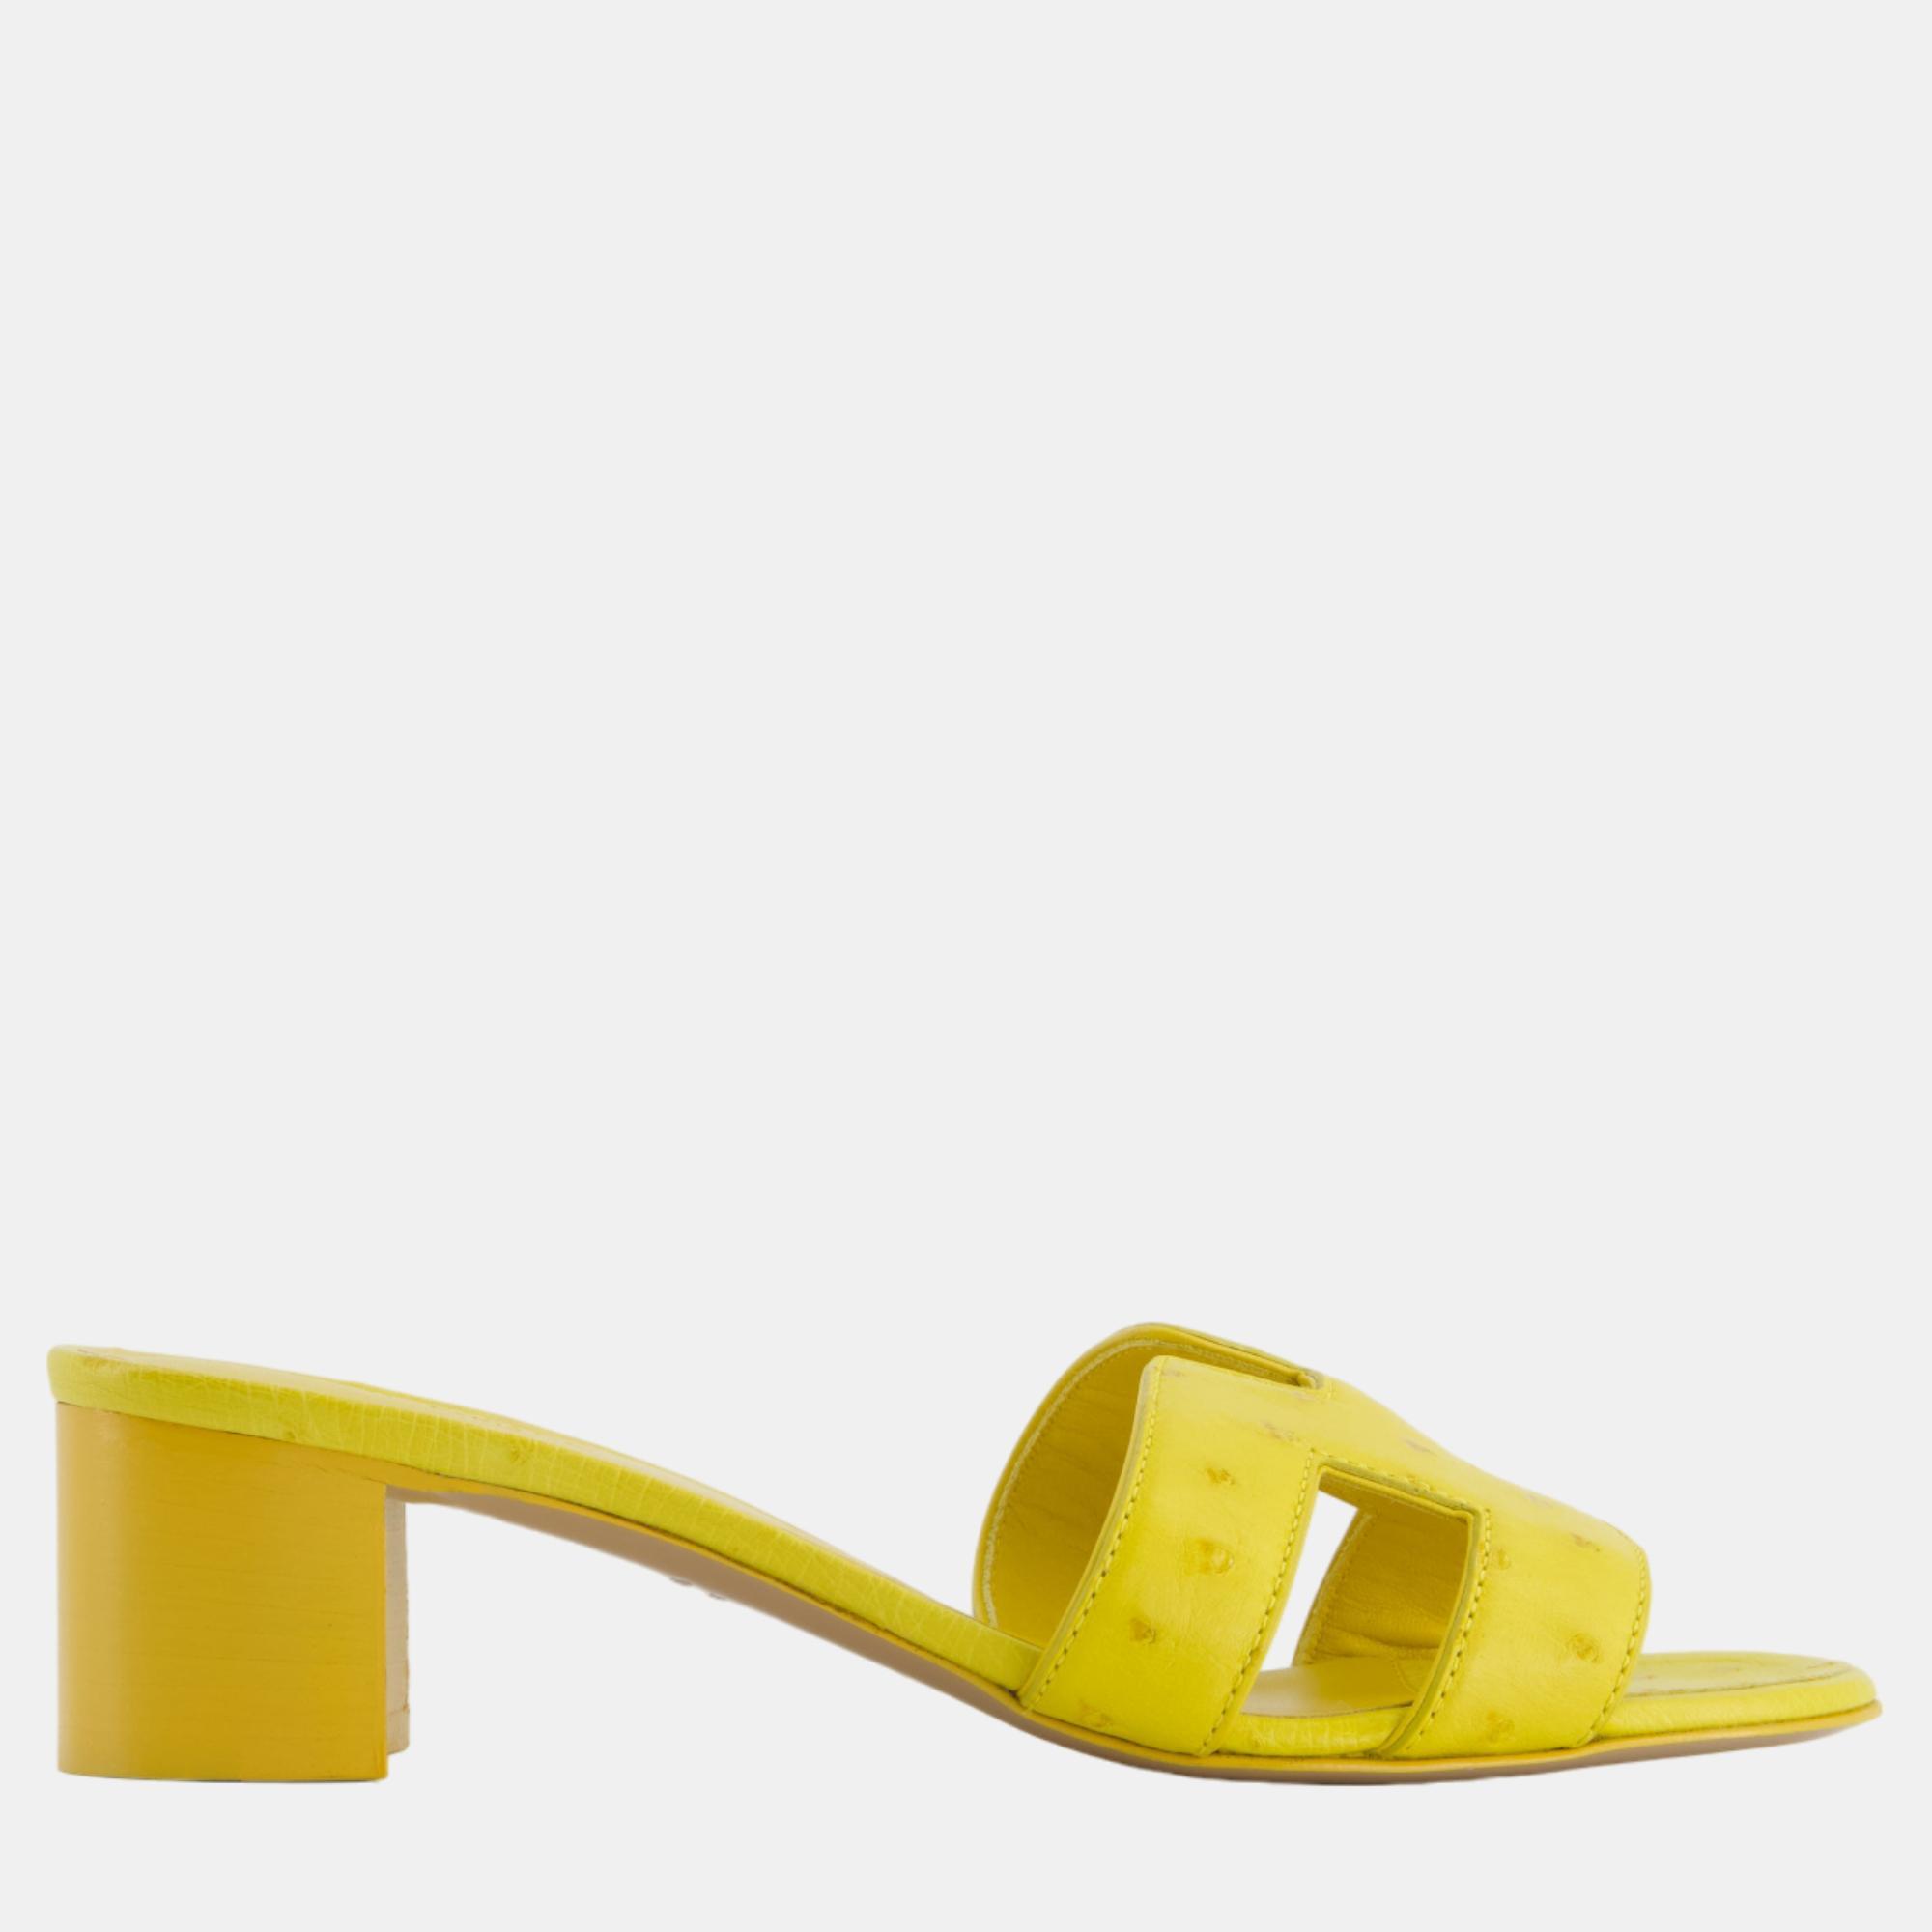 Hermes oasis sandal in jaune curcuma ostrich leather size eu 36